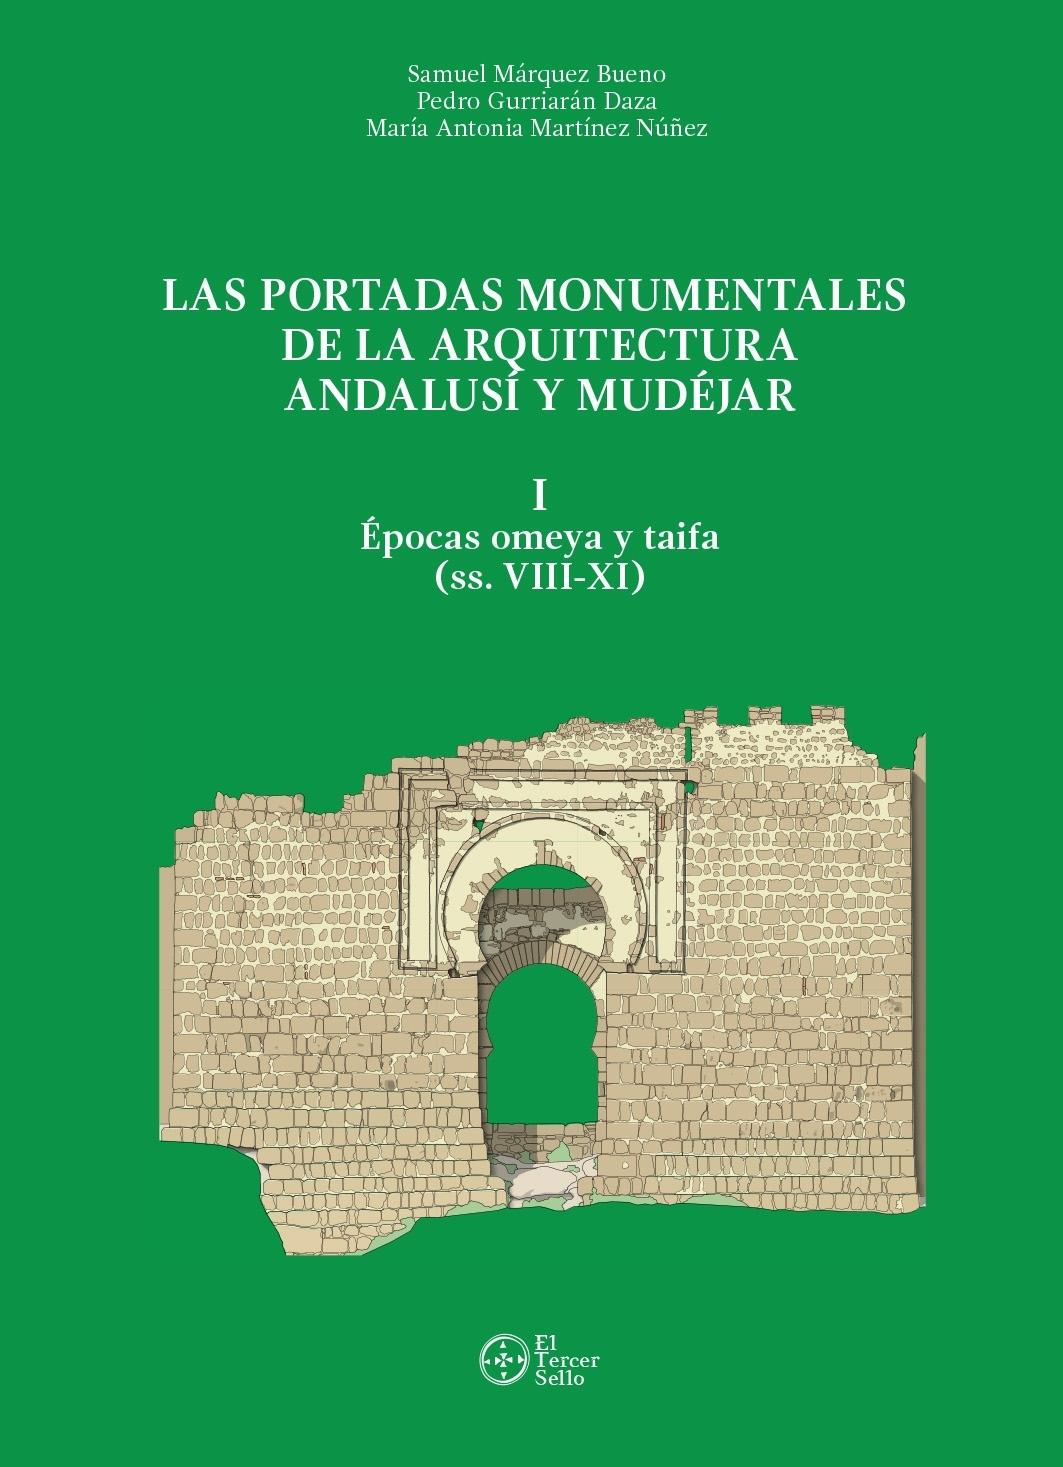 PORTADAS MONUMENTALES DE LA ARQUITECTURA ANDALUSÍ Y MUDÉJAR, I "ÉPOCAS OMEYA Y TAIFA (SS. VIII-XI)". 